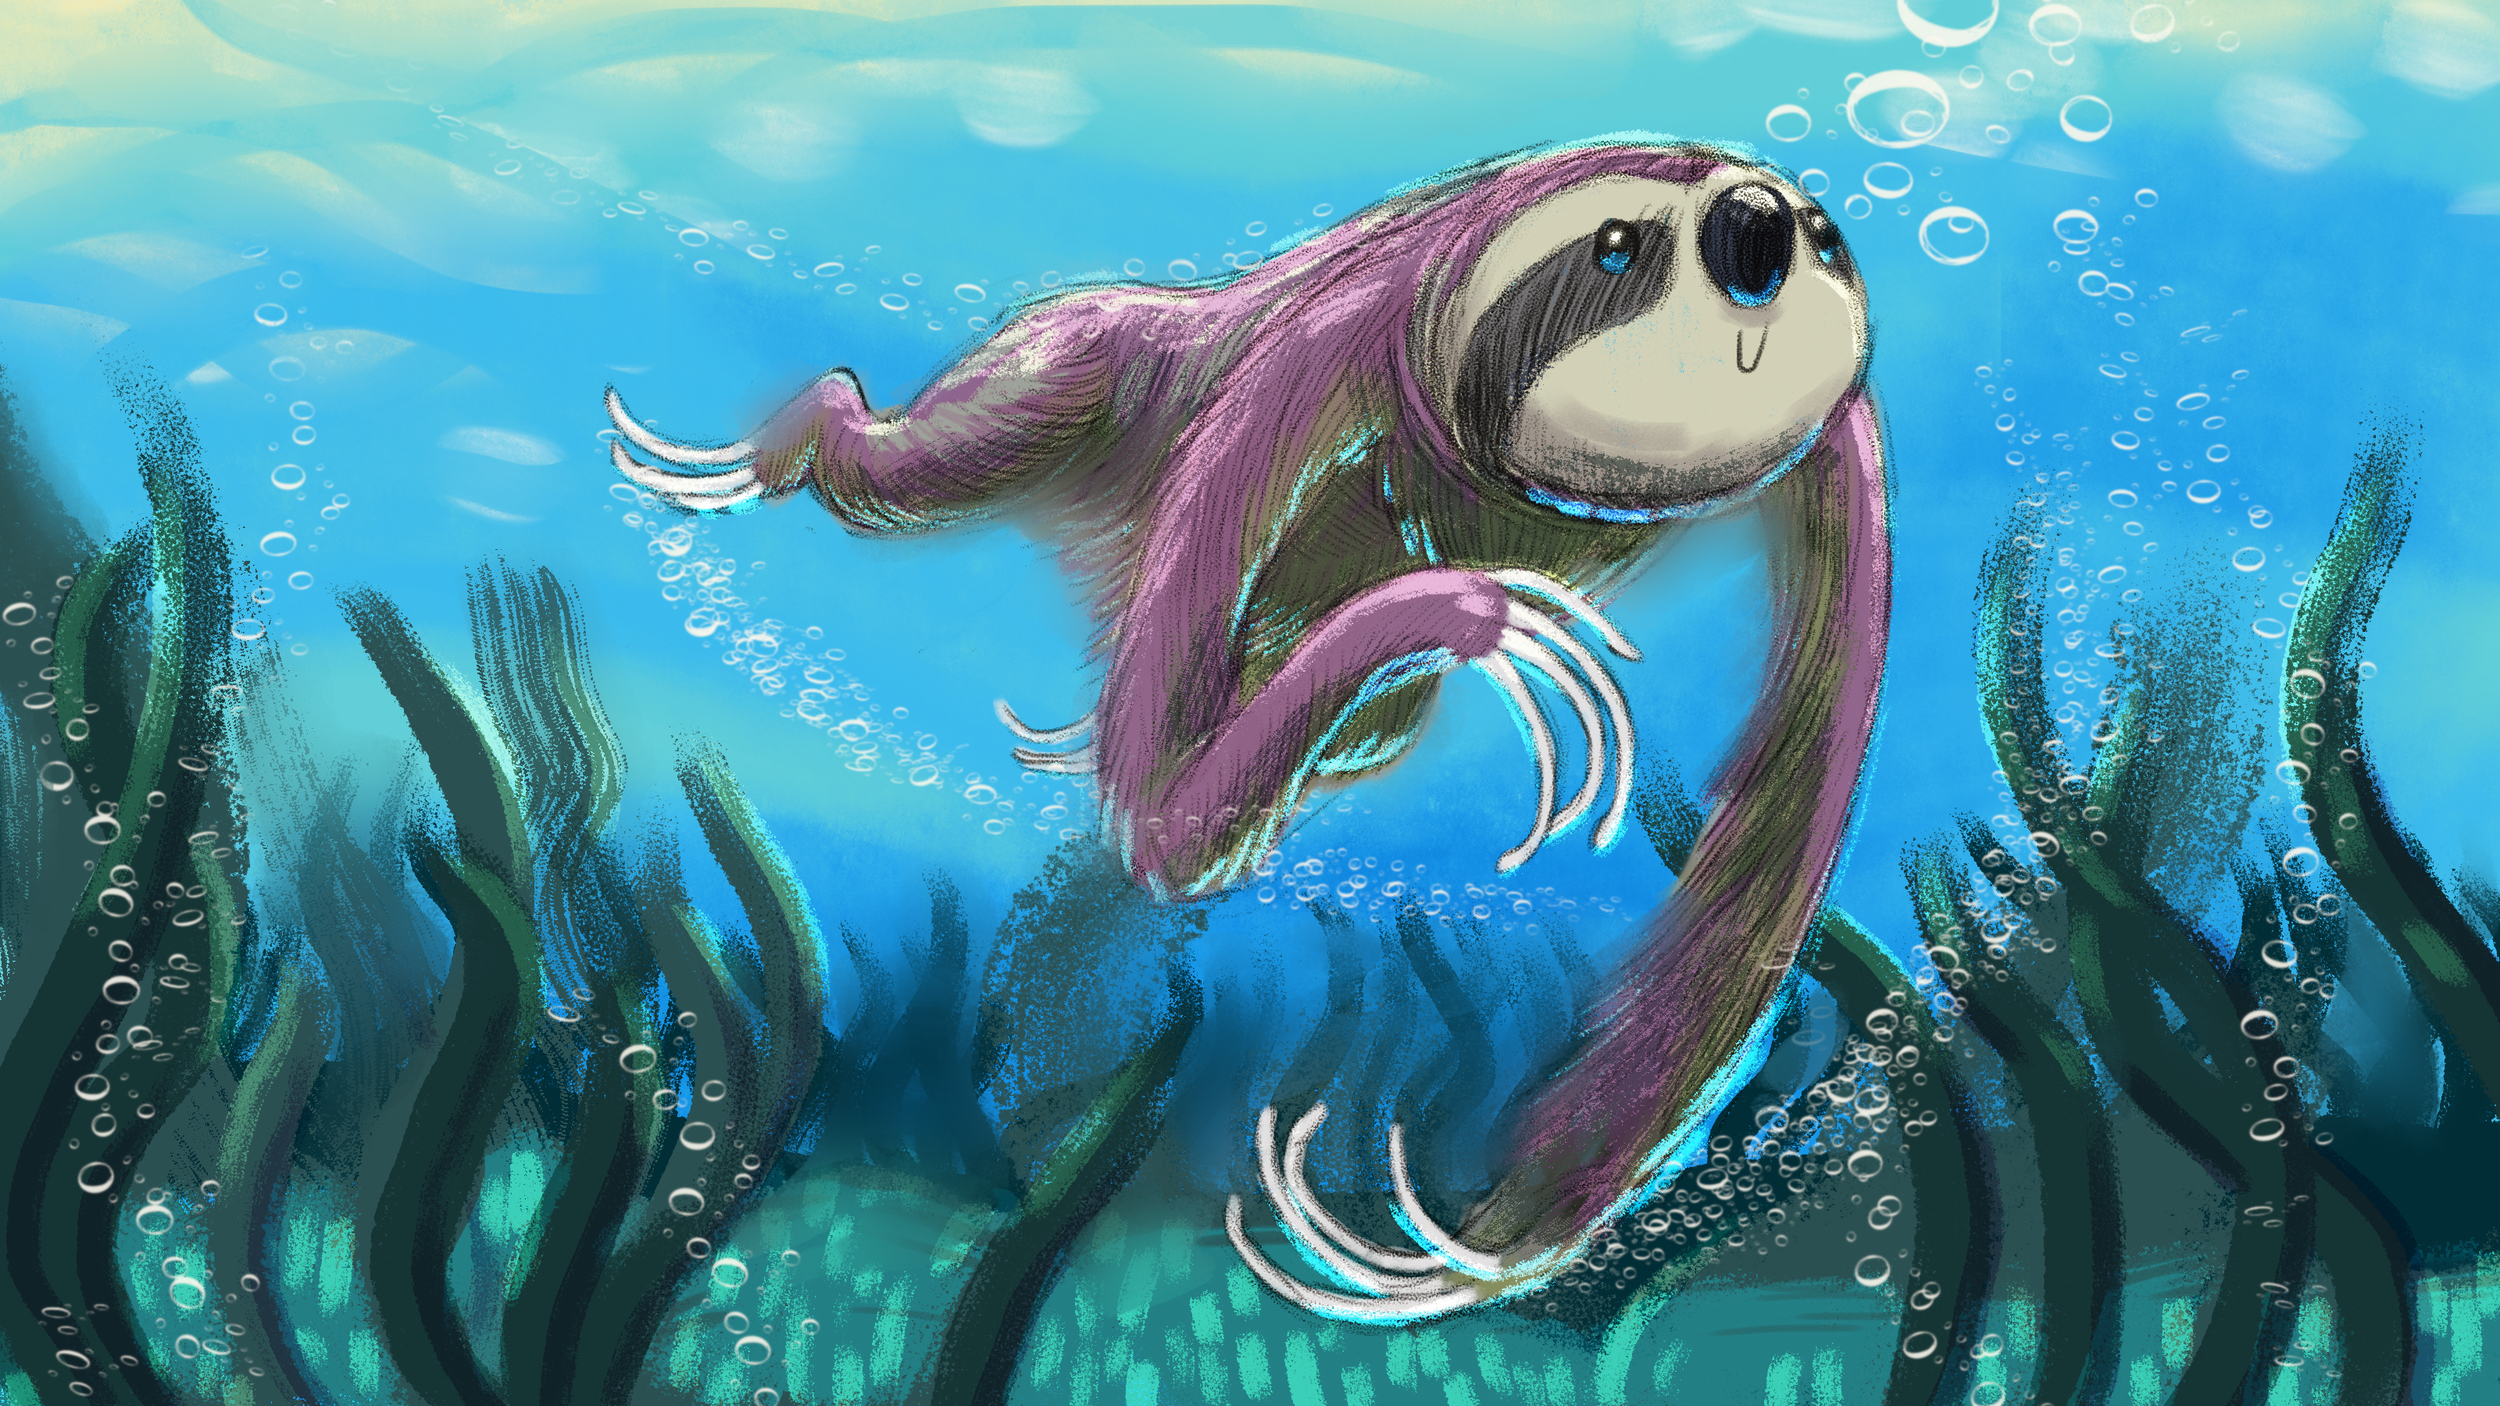 ADP sloth swim Reworked 2.jpg